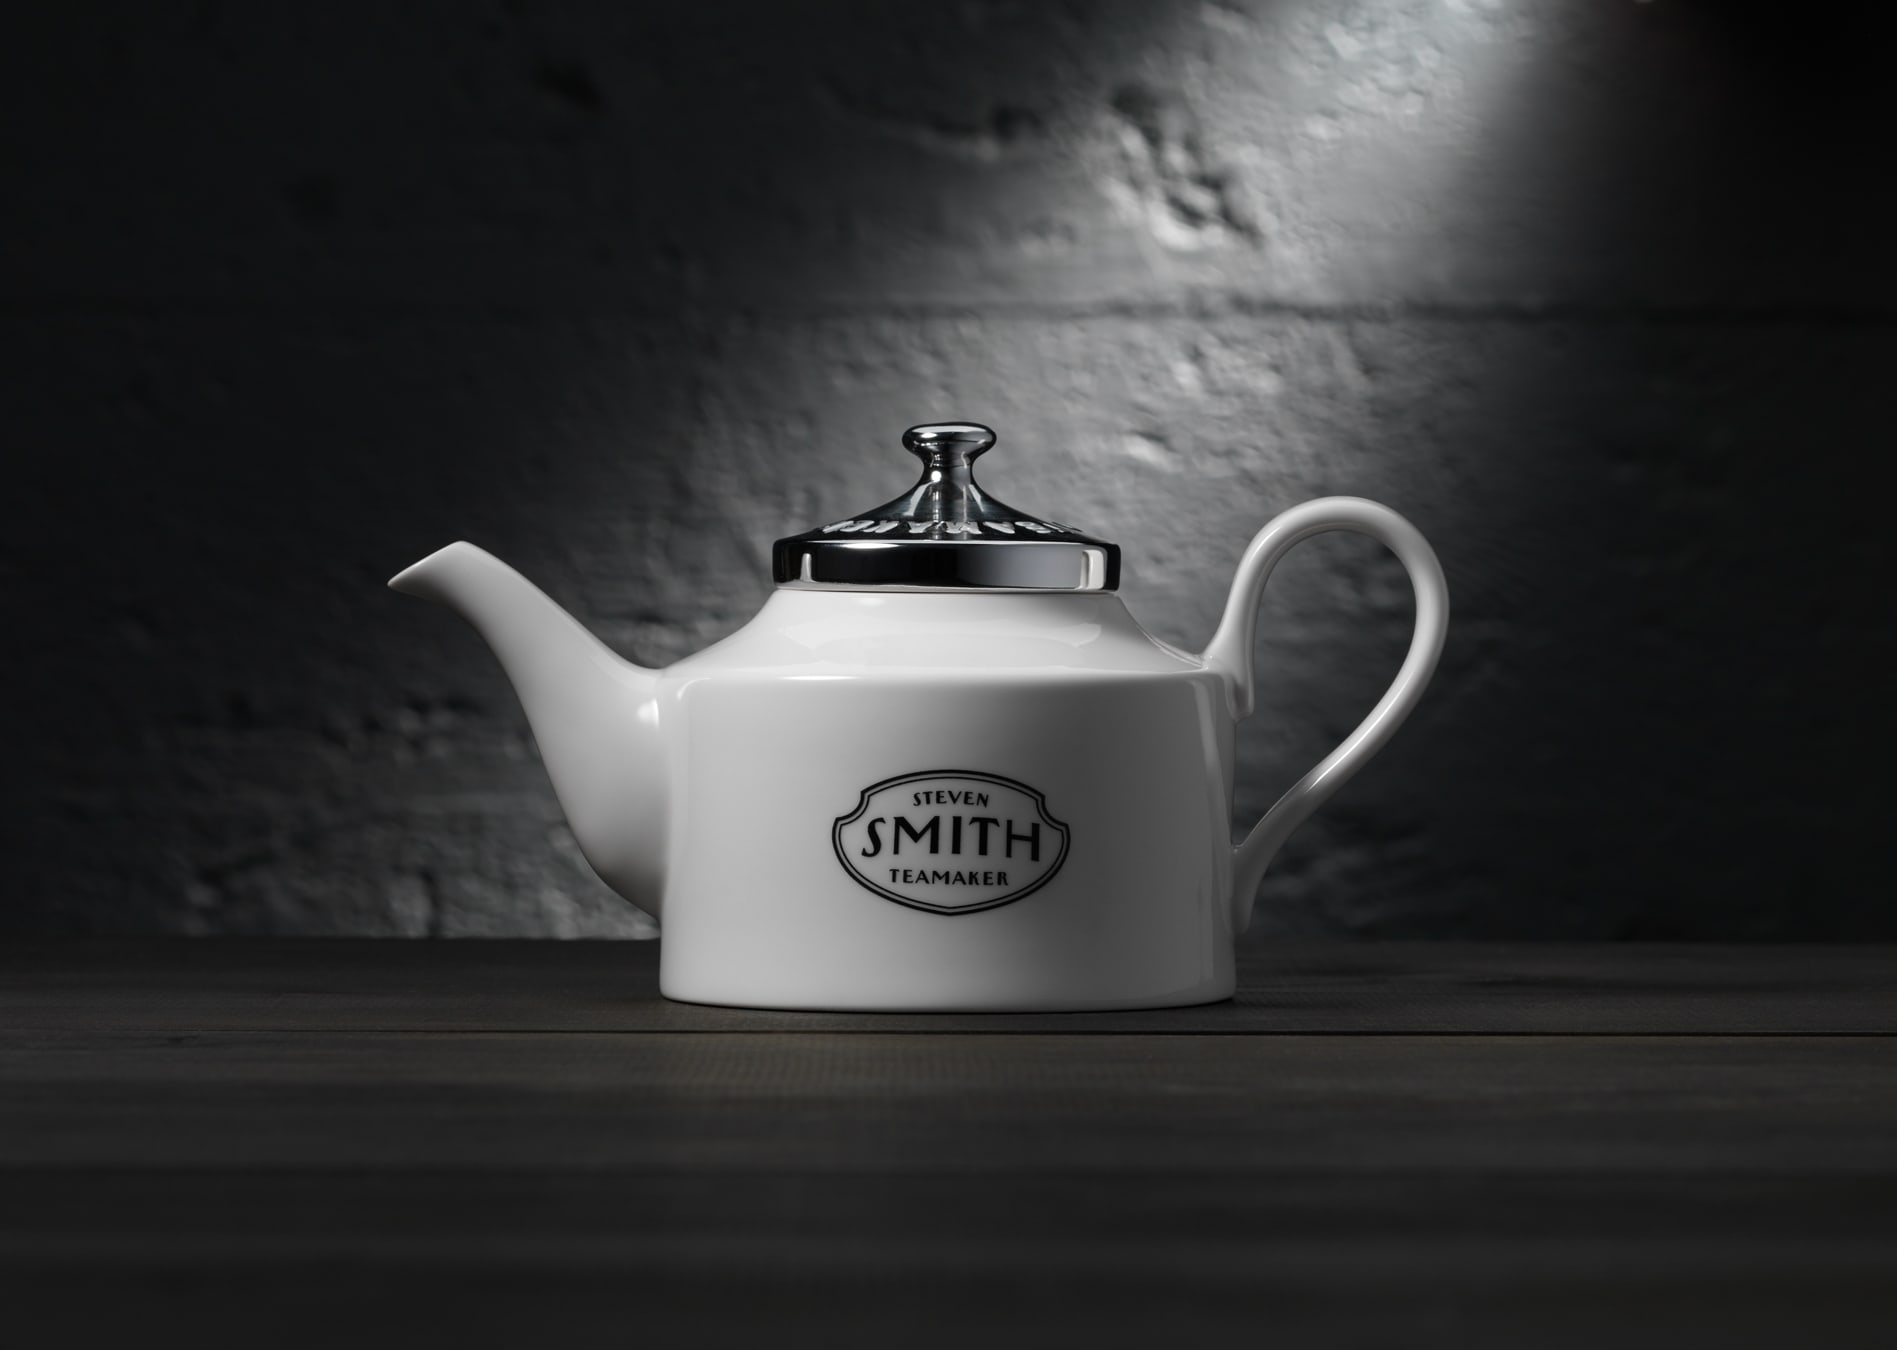 Steven Smith Teamaker tea pot design